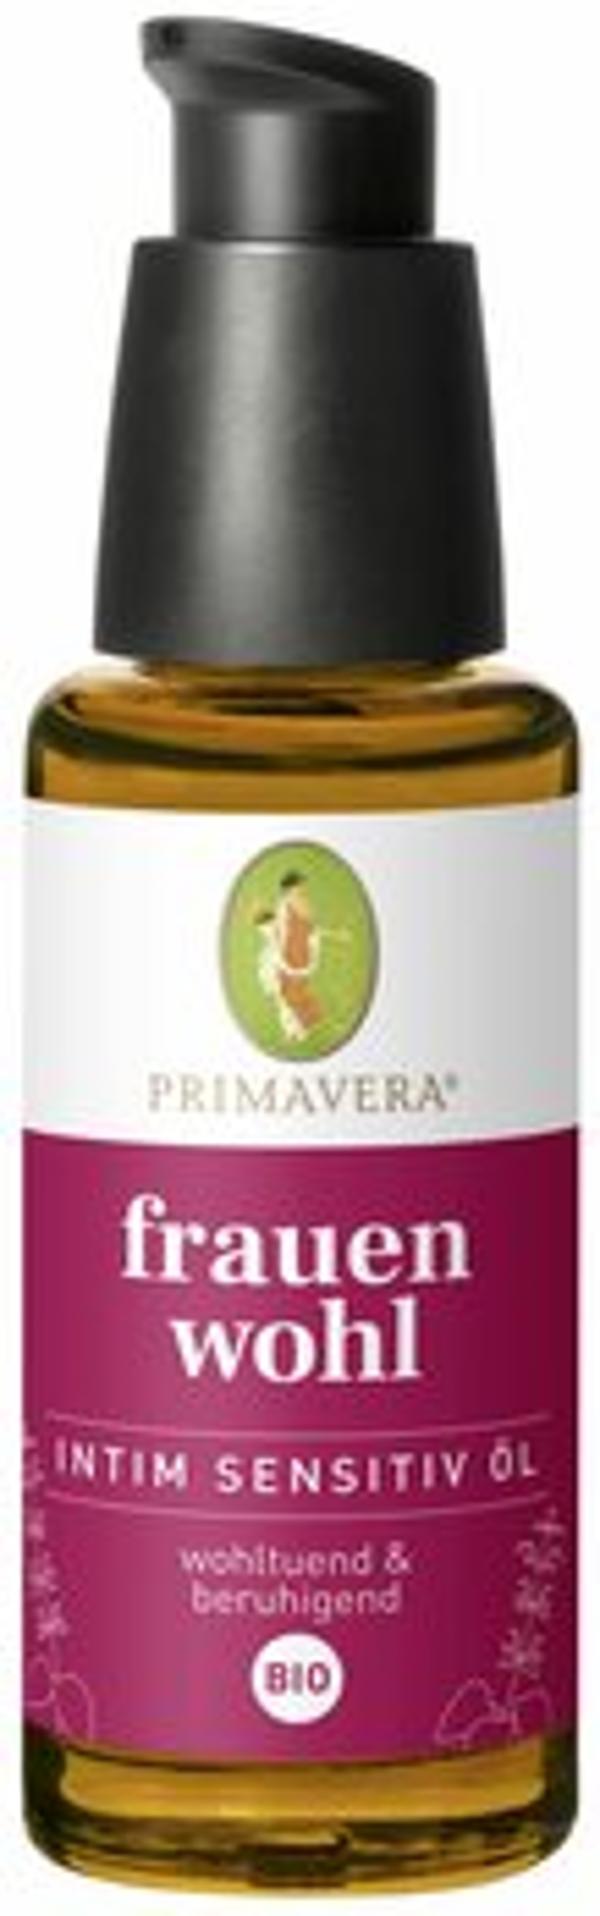 Produktfoto zu Frauenwohl Intim Sensitiv Öl, 30 ml